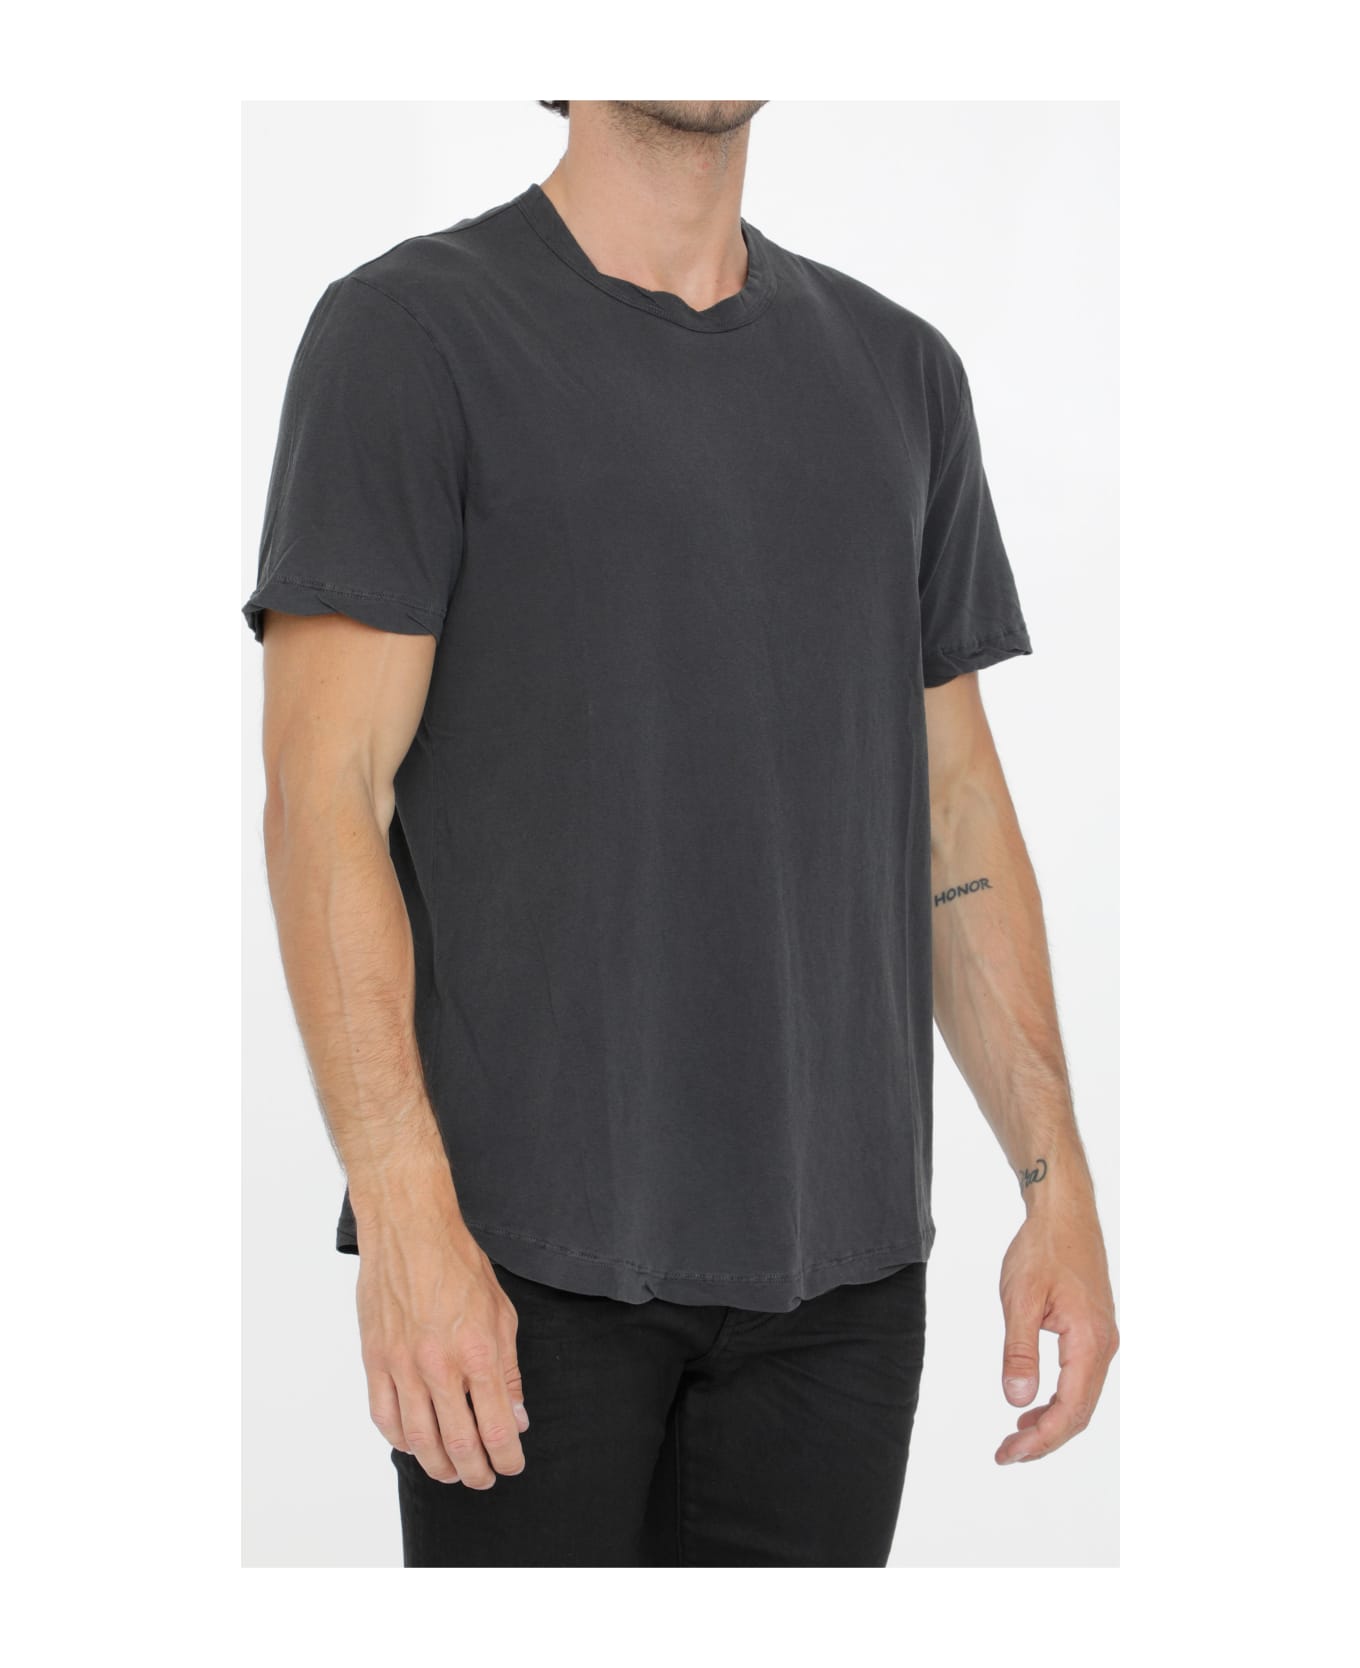 James Perse Grey Cotton T-shirt - GREY